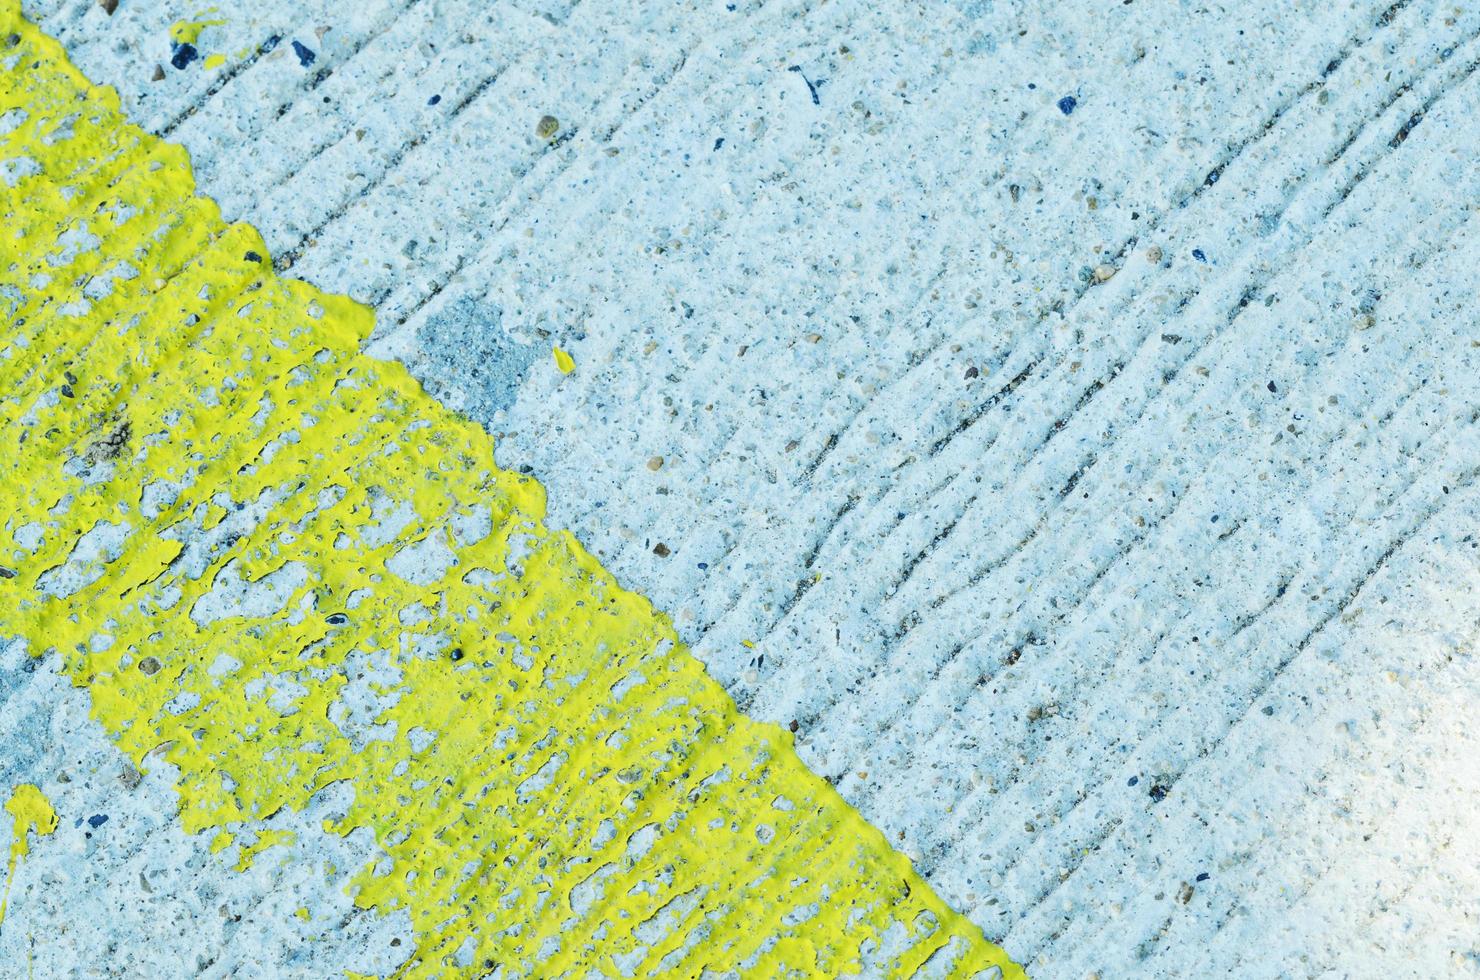 fundos do grunge com tinta amarela descascada na textura perfeita da estrada de concreto foto